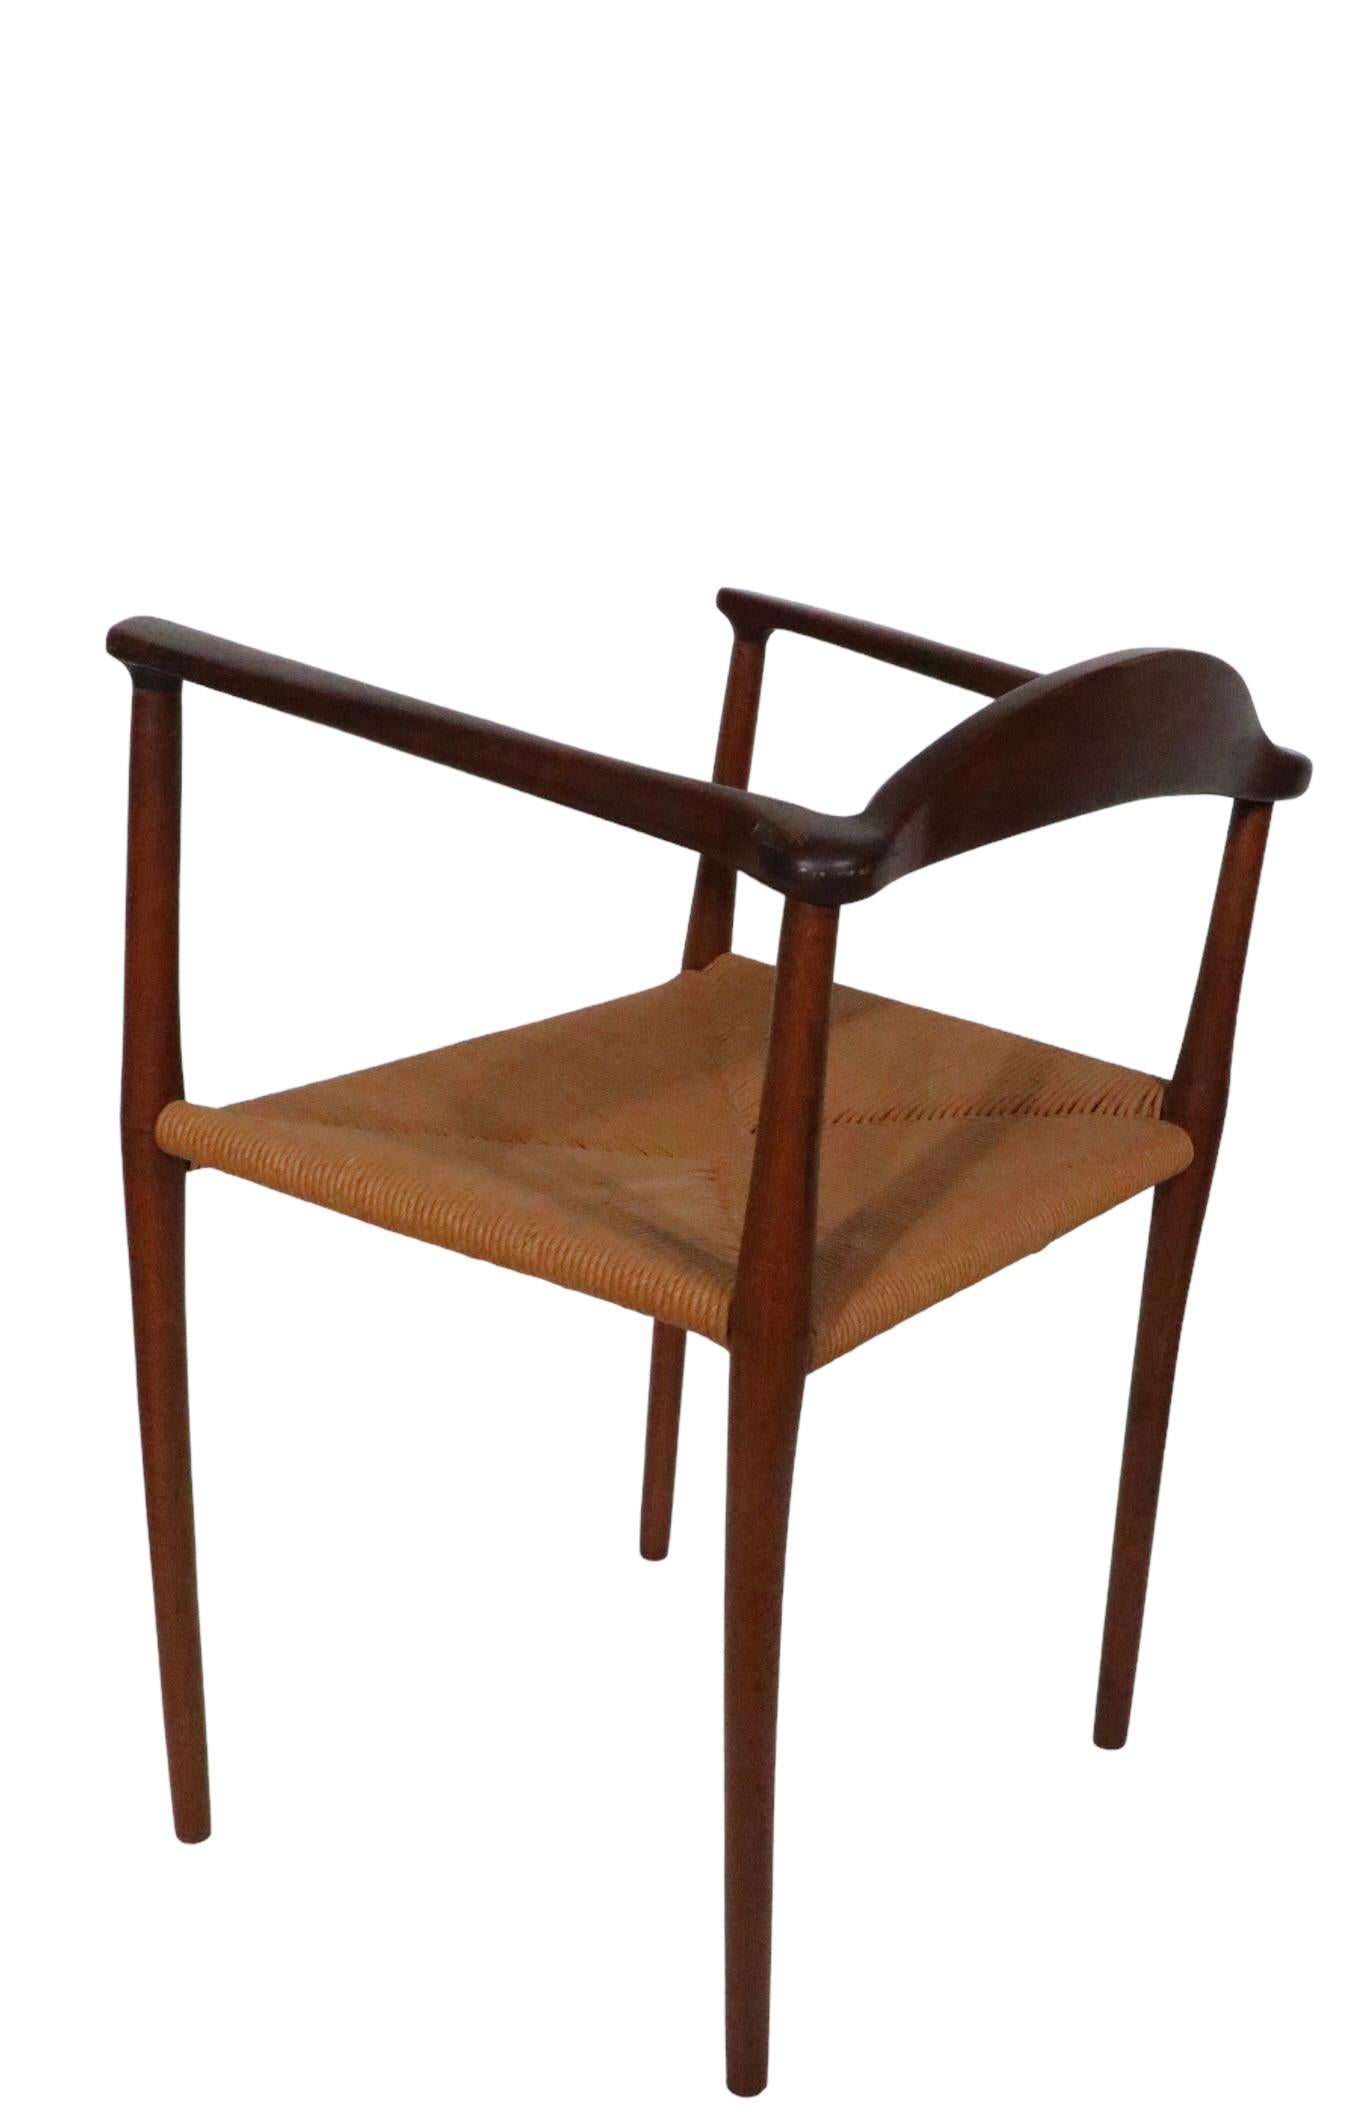 Scandinavian Modern Mid Century Danish Modern Arm Dining Chair in Walnut with Rope Seat, circa 1950s